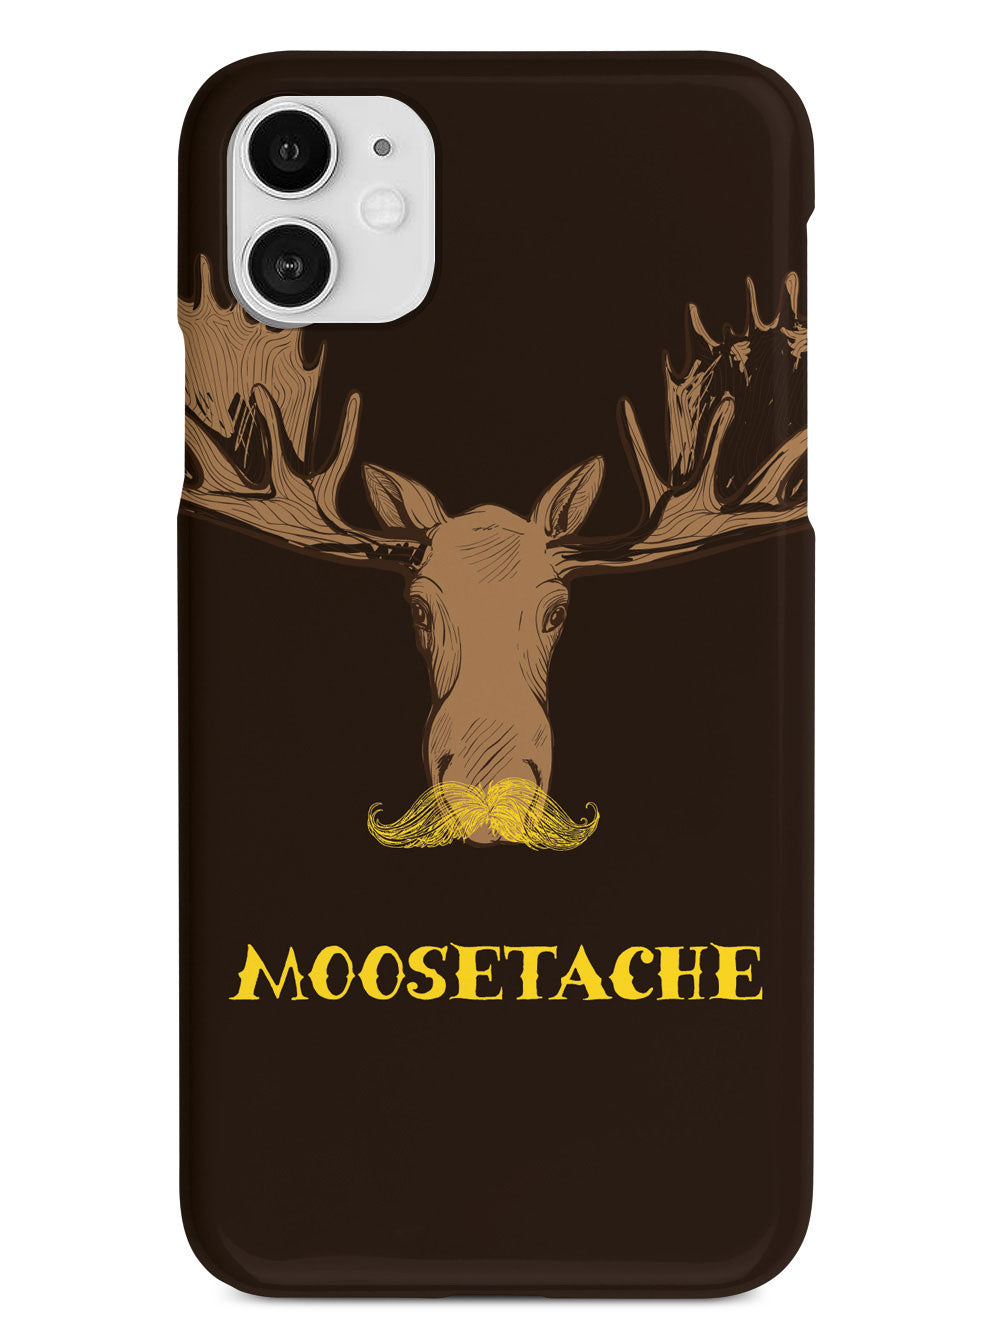 Moosetache - Mustache Case